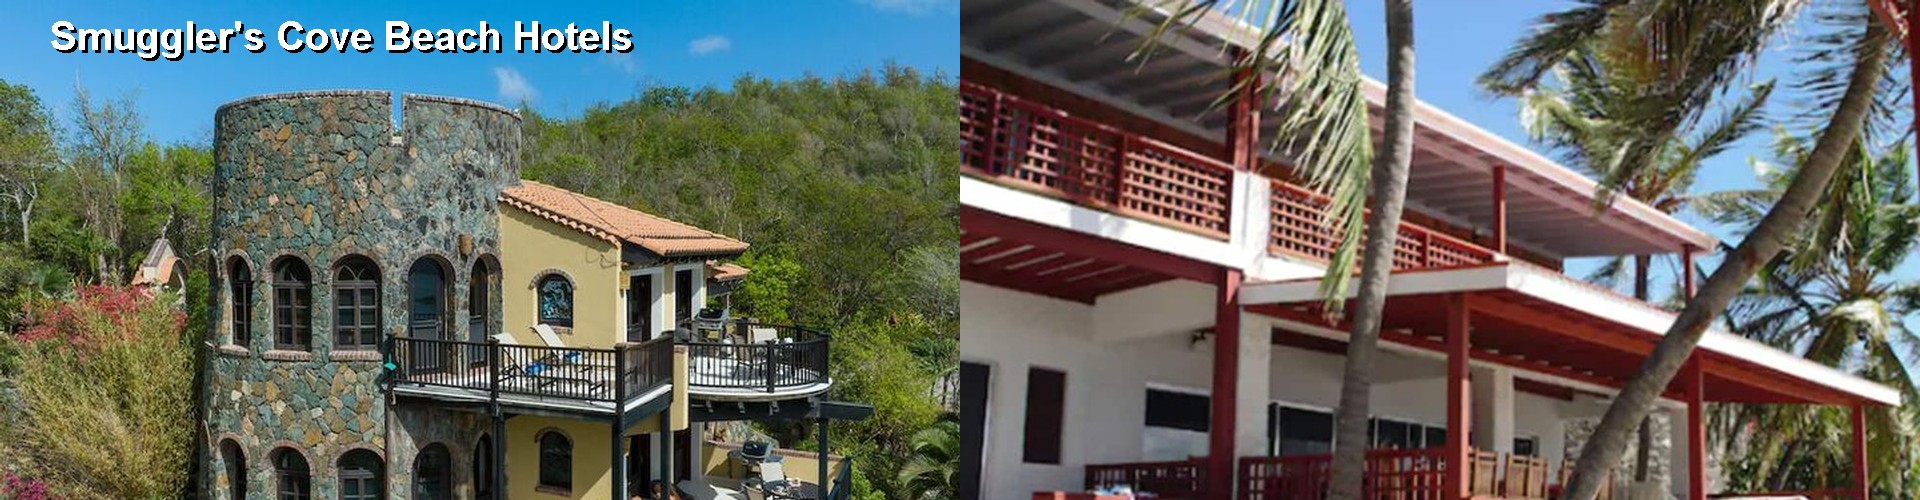 5 Best Hotels near Smuggler's Cove Beach